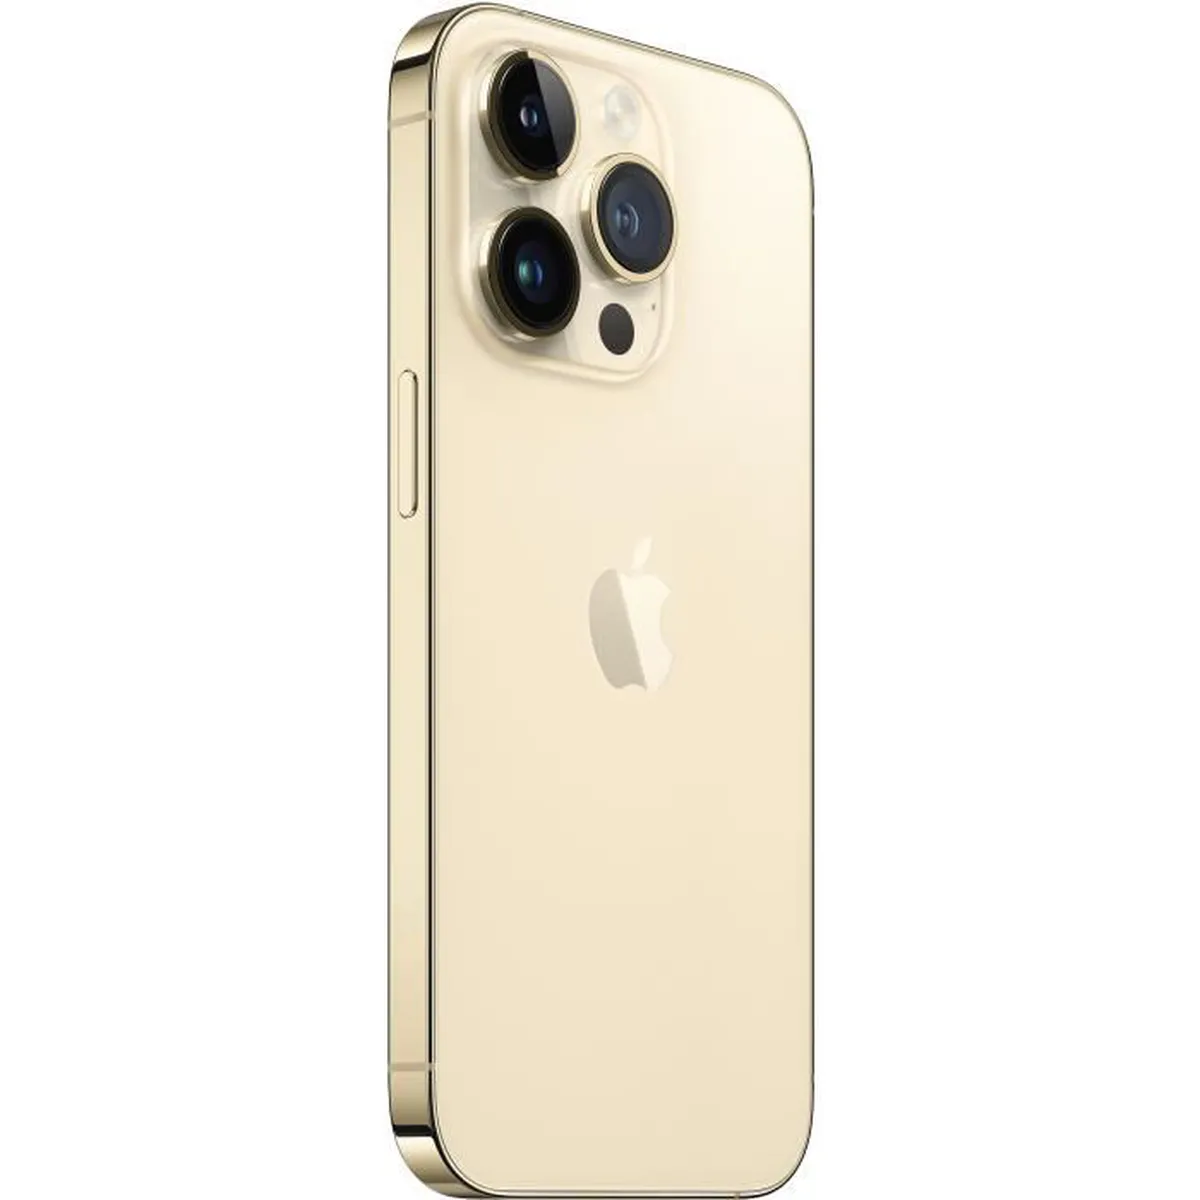 iPhone 13 Pro, 128 GB, Dual-SIM, gold, 596 €